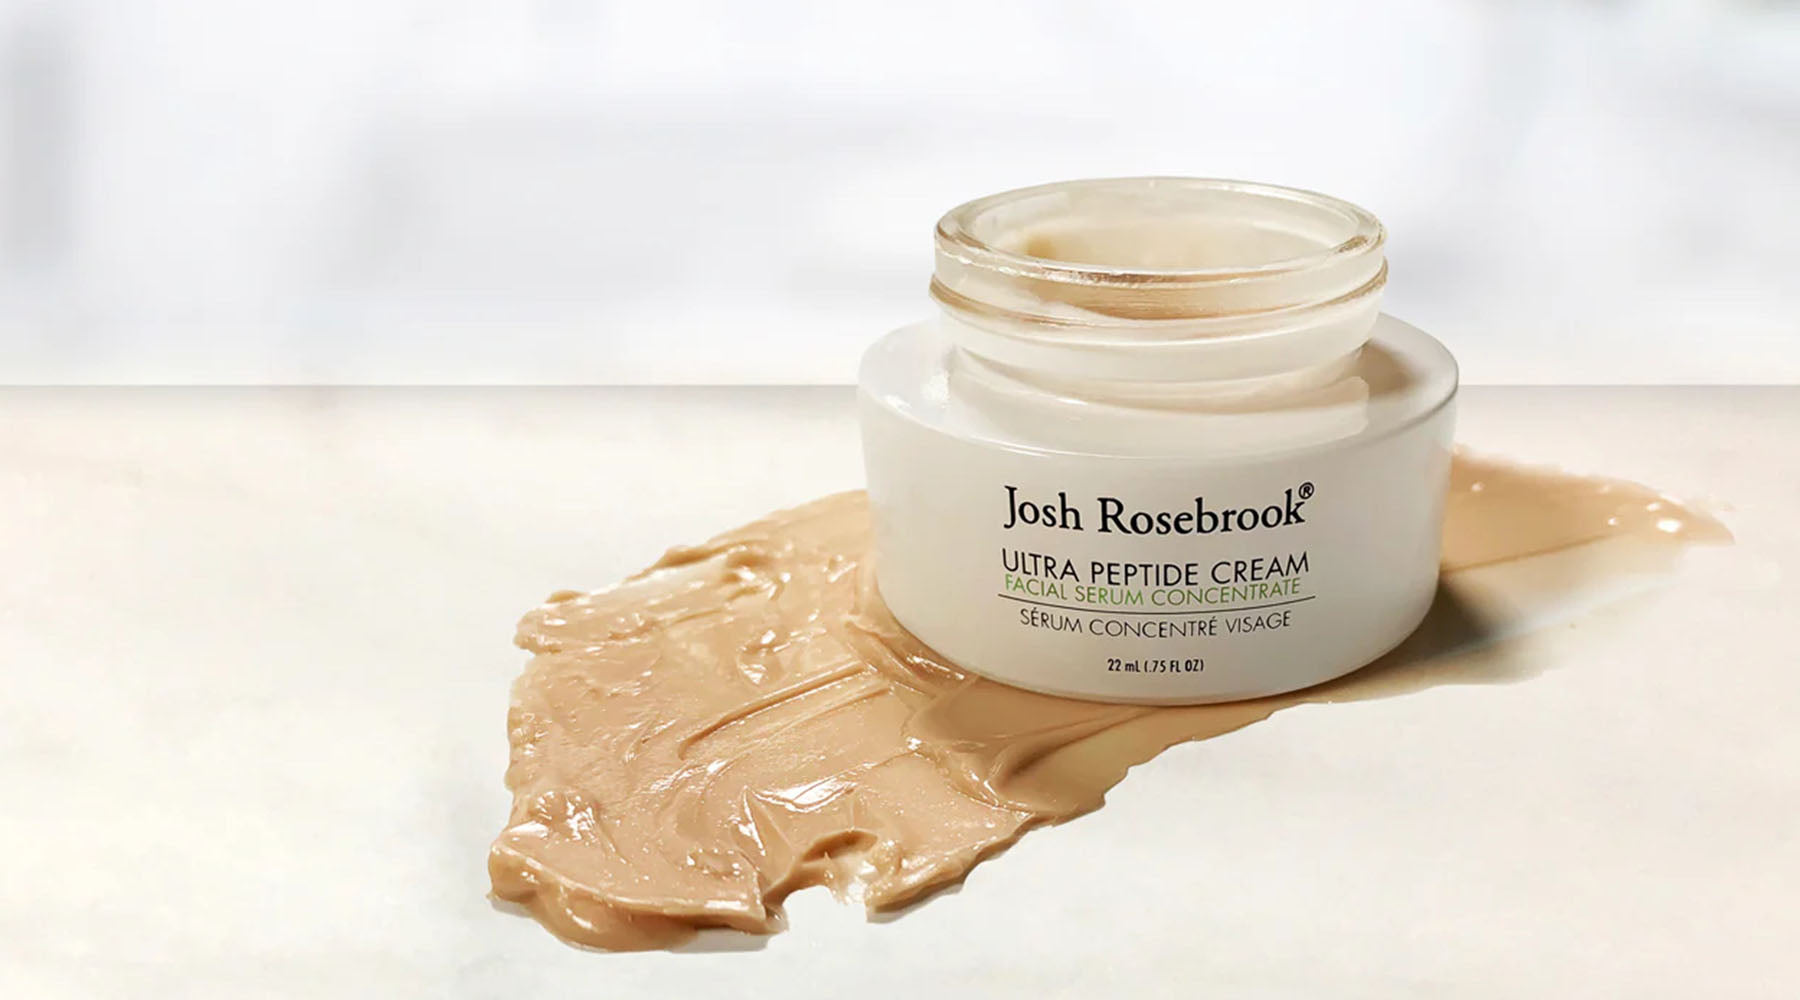 Josh Rosebrook Ultra Peptide Cream